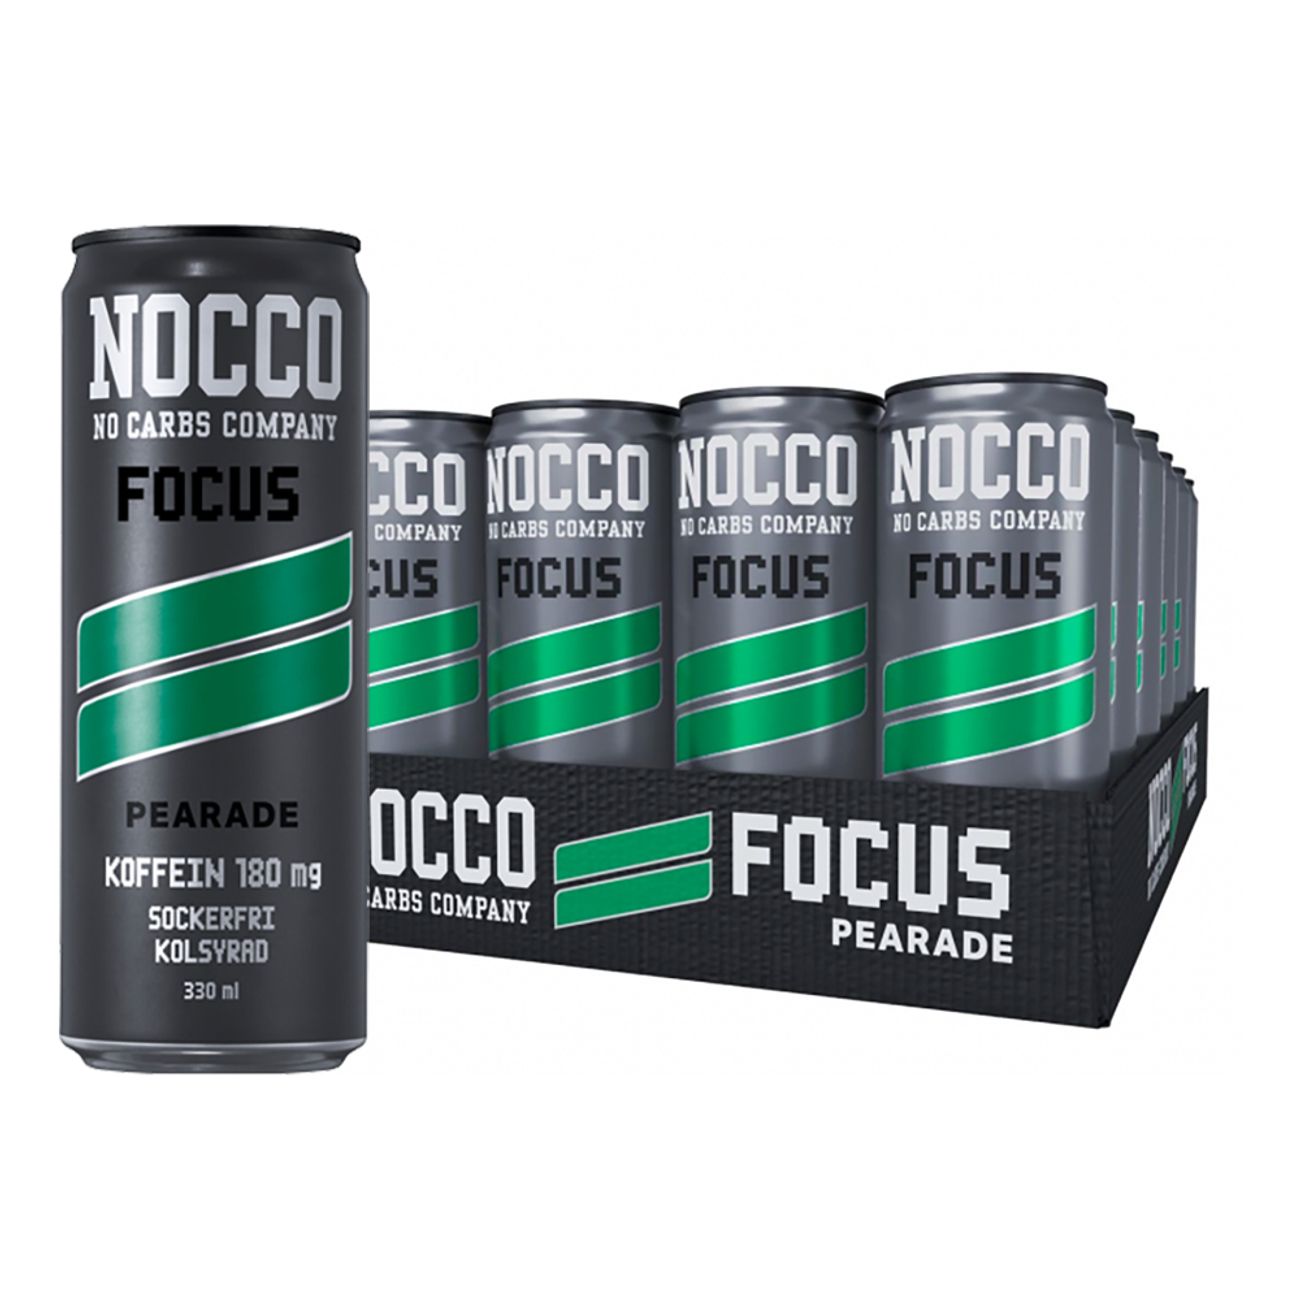 nocco-focus-pearade-92353-1